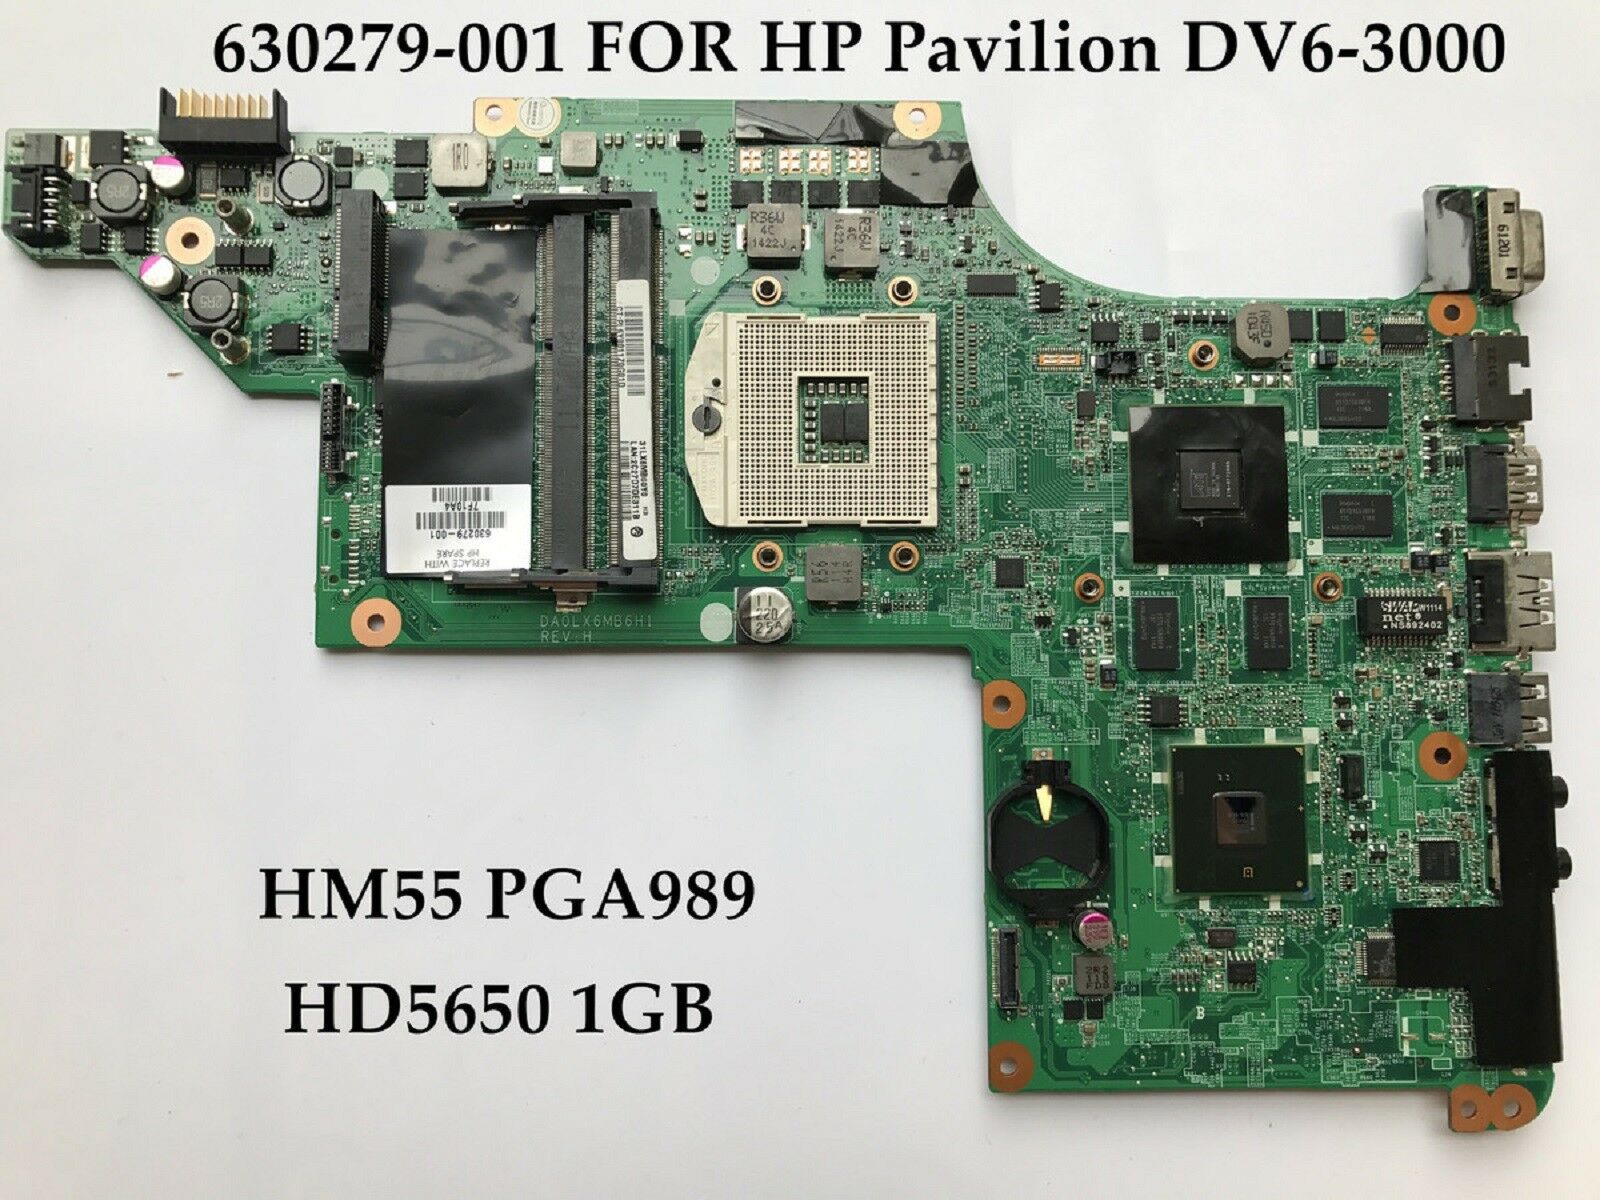 HP DV6 DV6T DV6-3100 Series Intel HM55 5650/1G Motherboard 630279-001 Test Good Compatible CPU Brand: Int